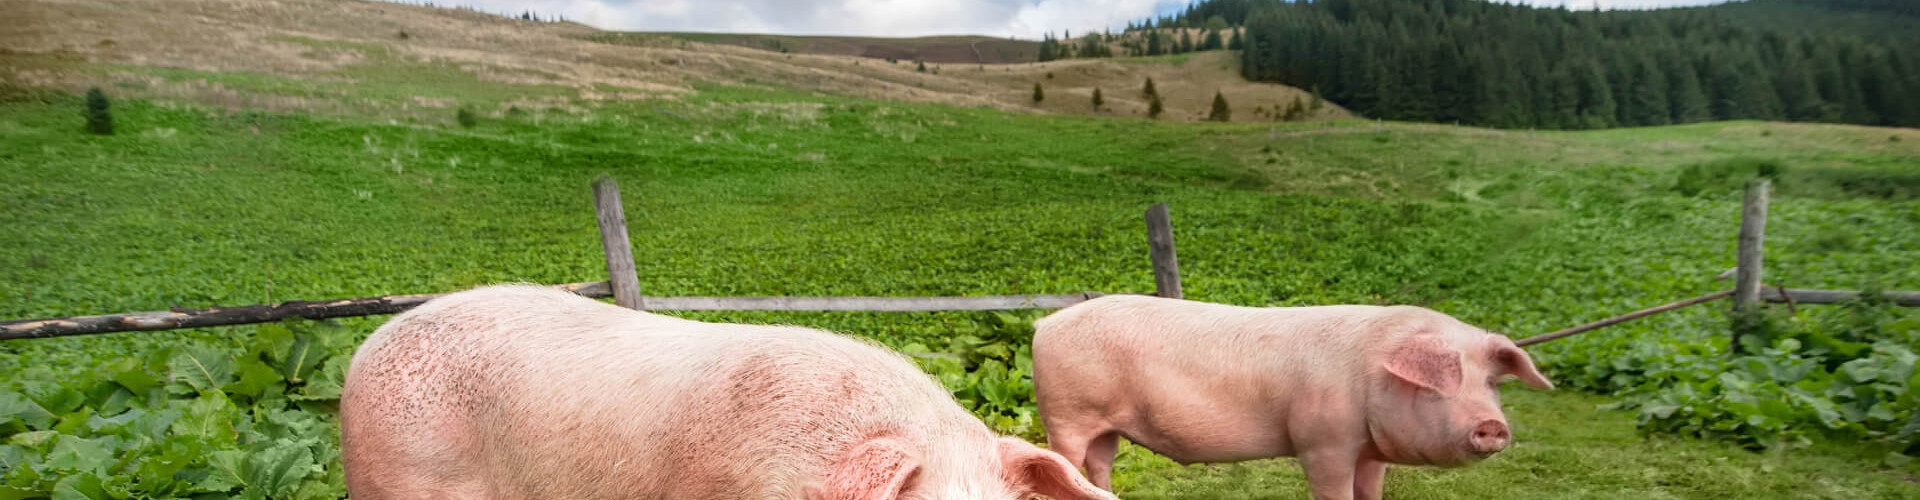 Boyaux de porc et chaudin de porc - La bovida